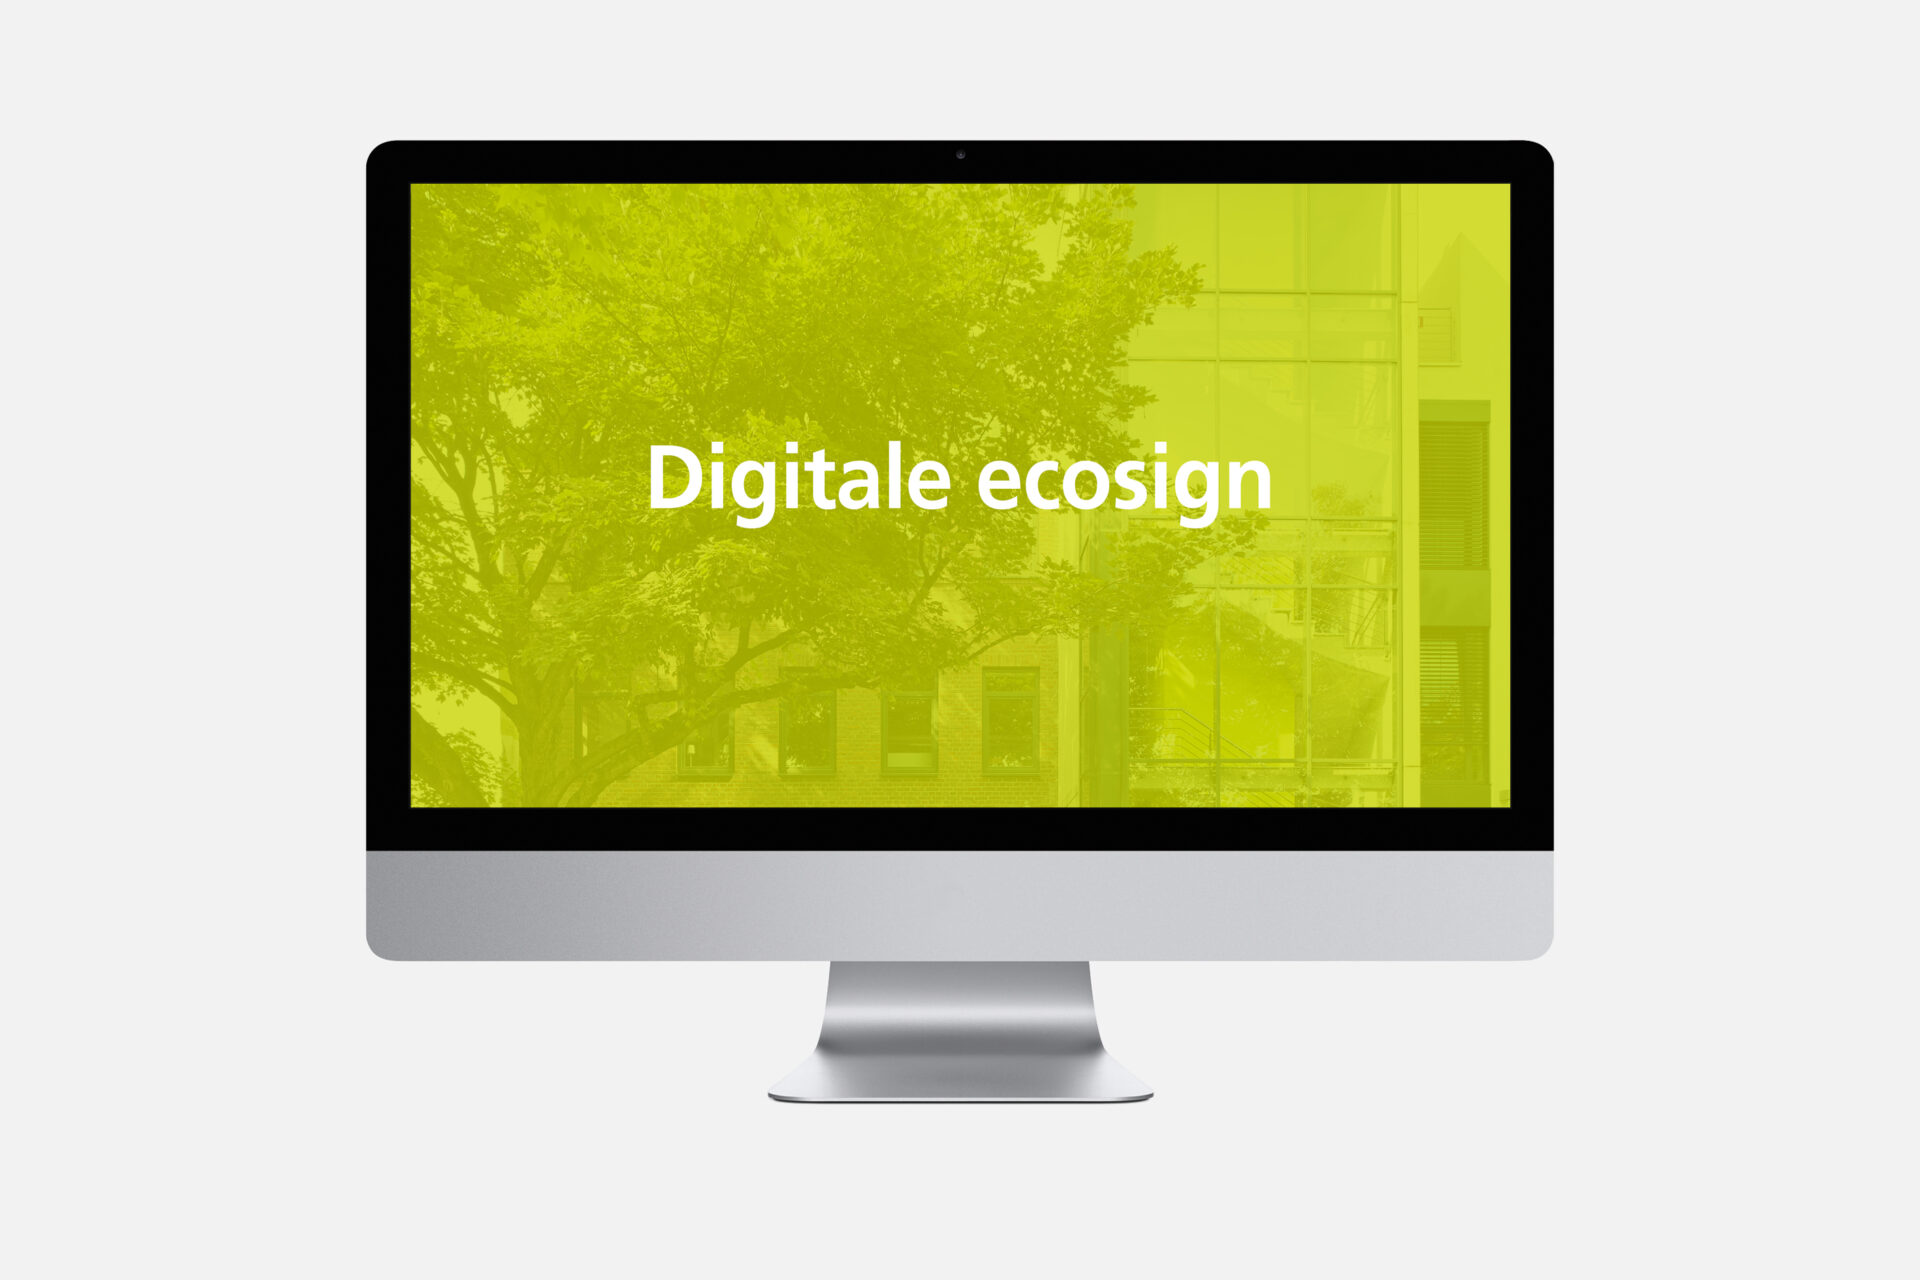 ecosign – Digitale Lehre